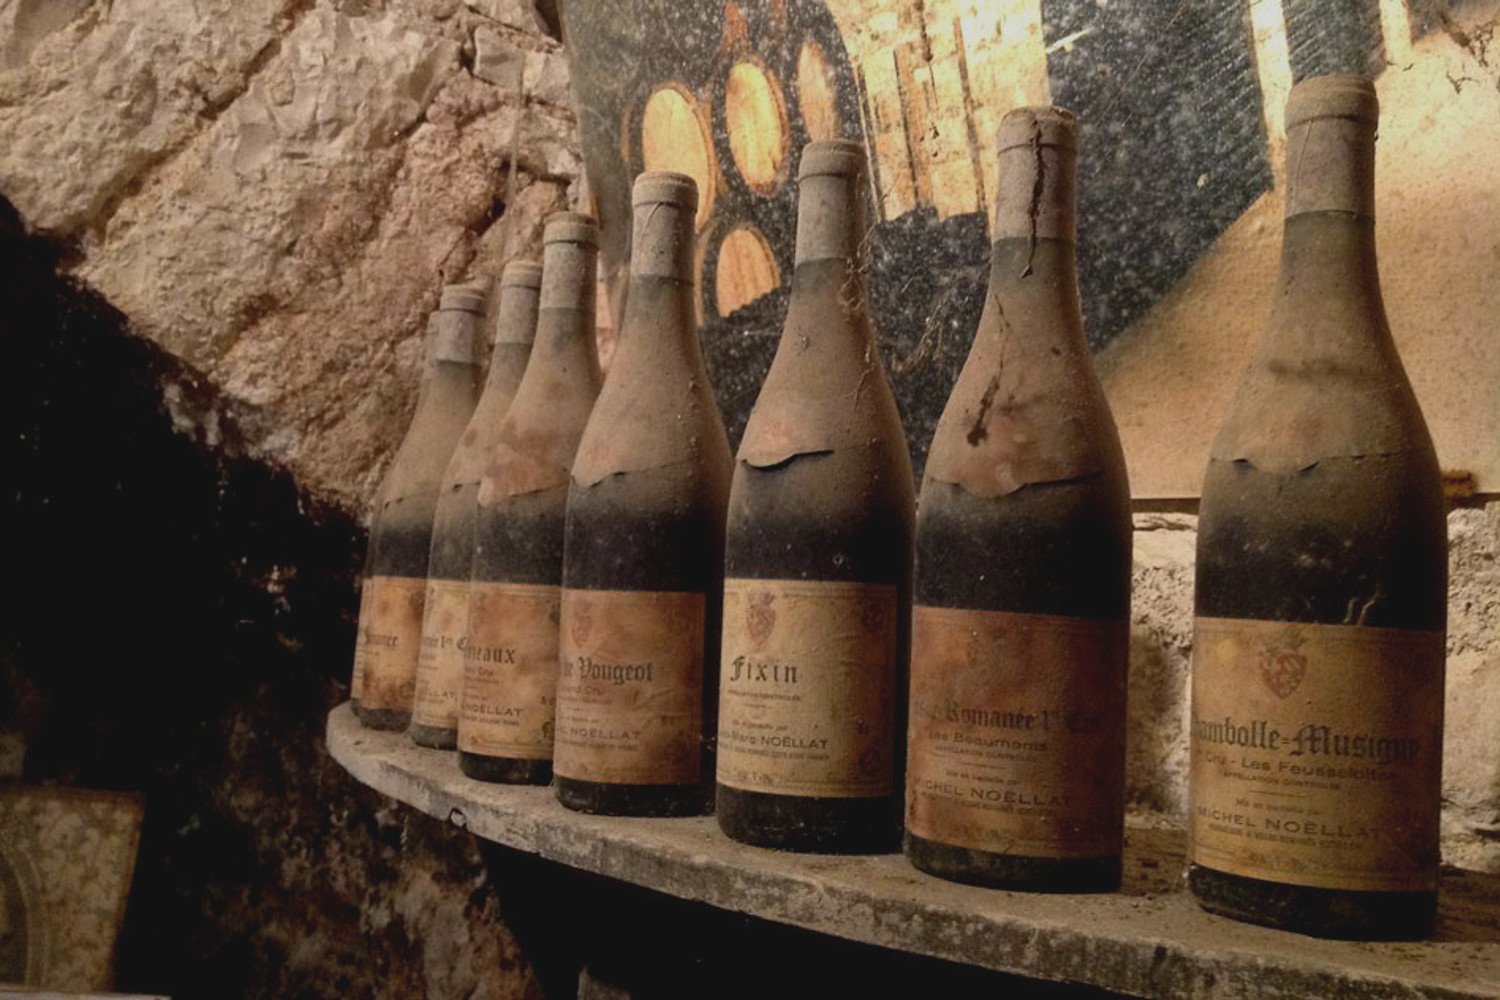 Вино старая дорога. Вино Франция Бургундия. Винодельни Бургундии. Виноделие Франция 18 век. Вина региона Бургундии.